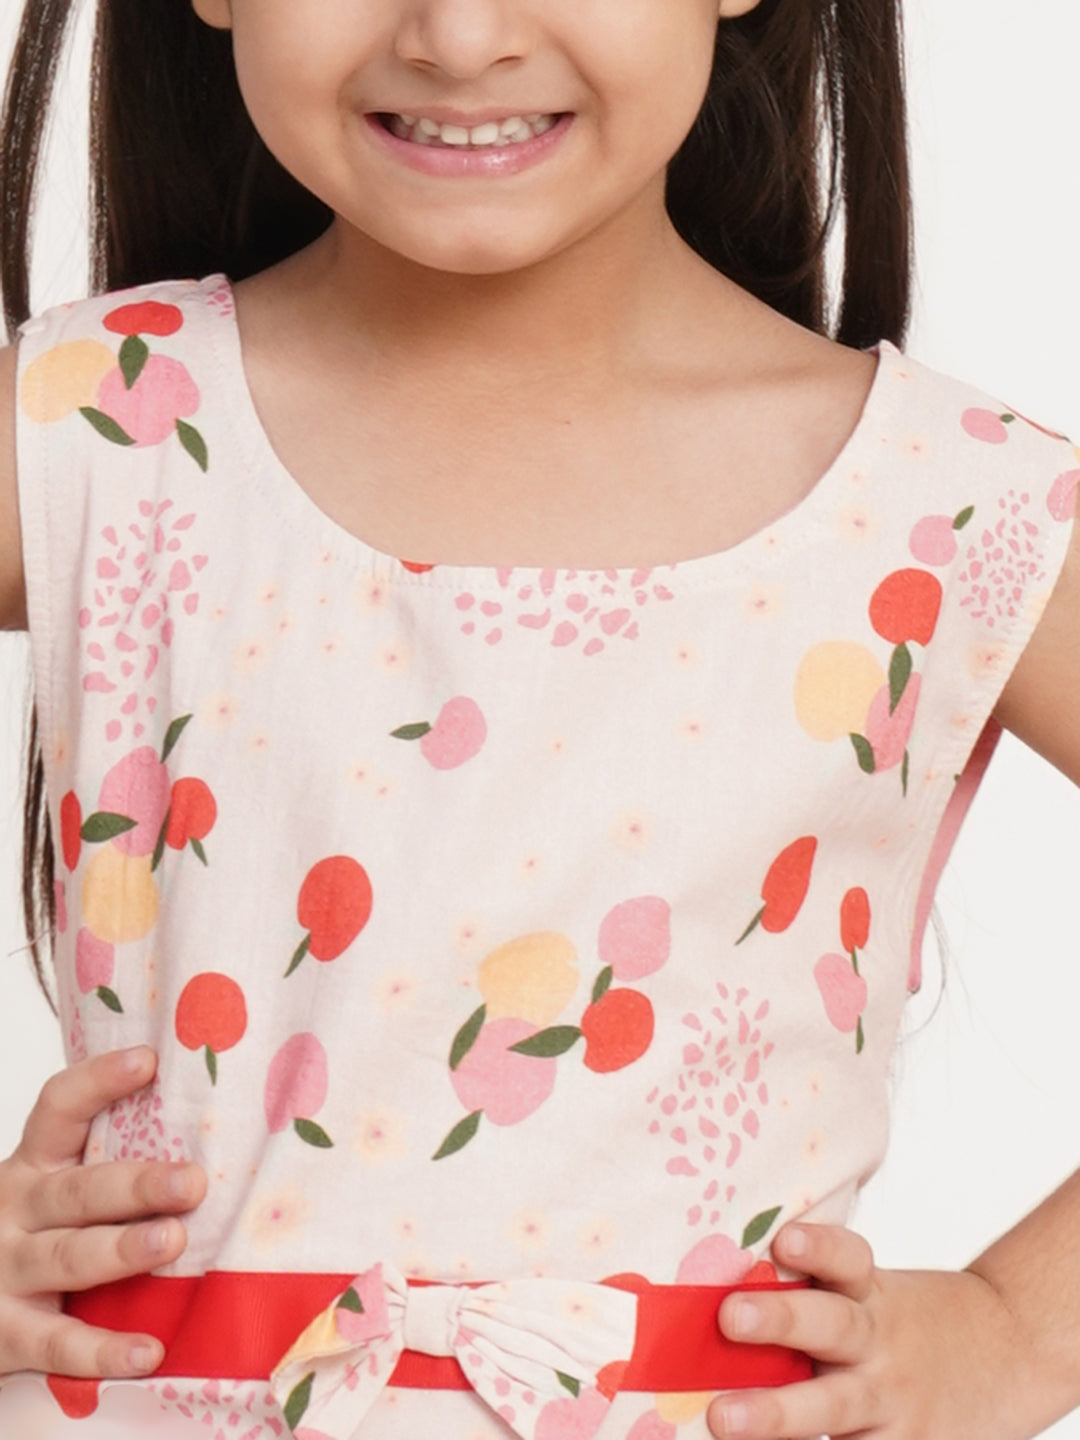 CREATIVE KID'S Girl Pink Printed Cotton A-Line Dress